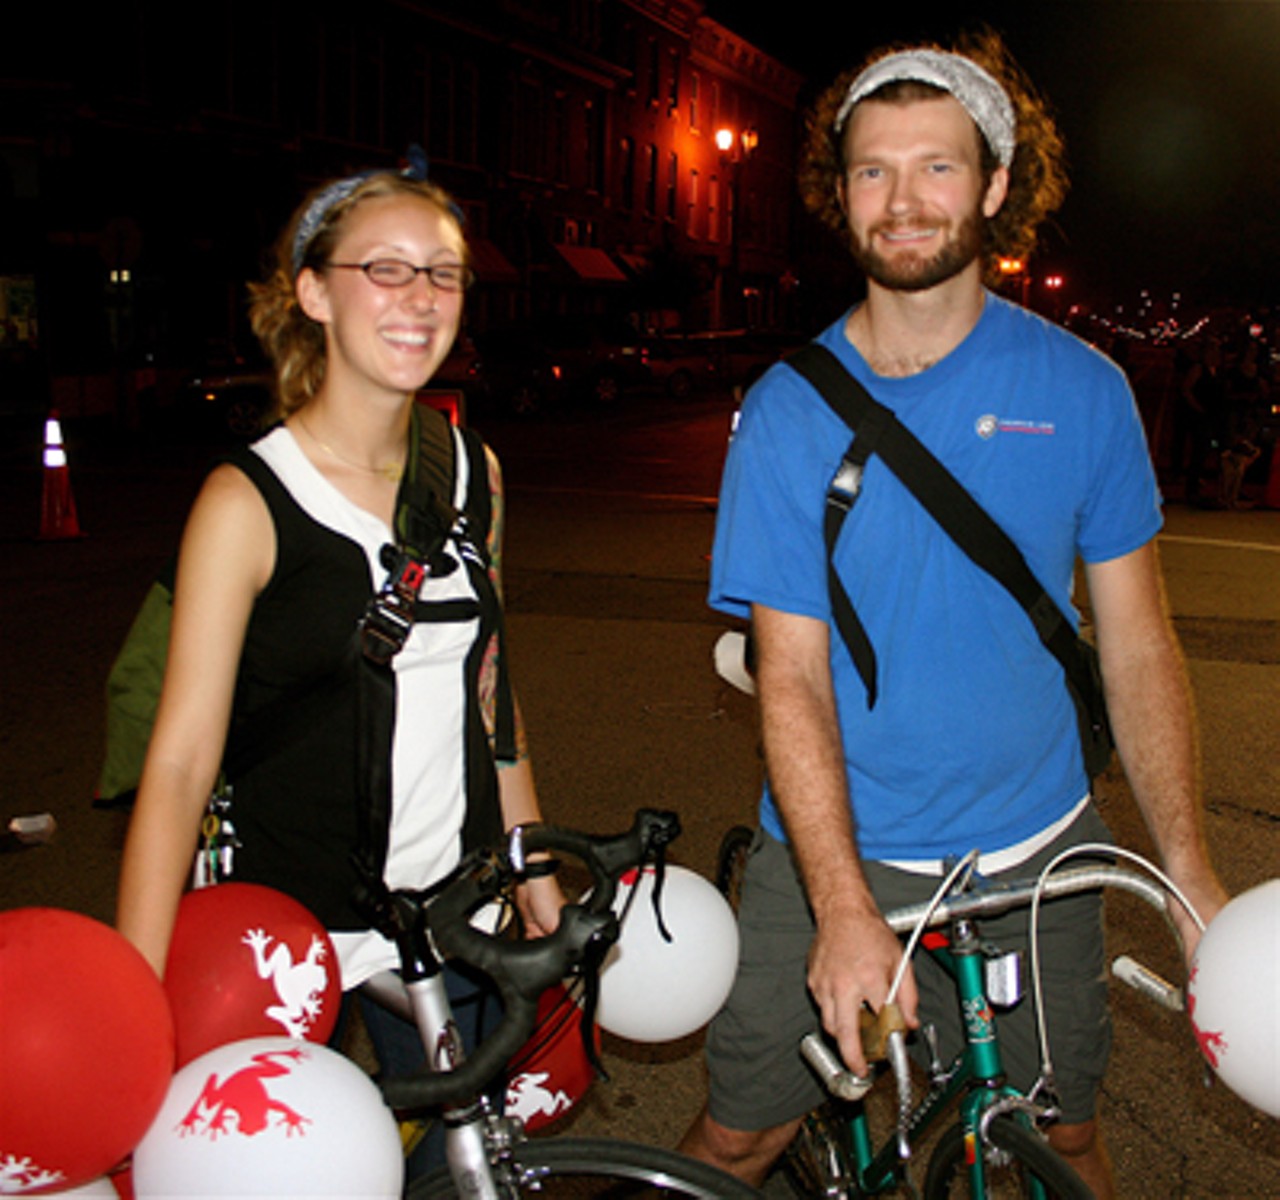 Spectators with bikes & balloons.